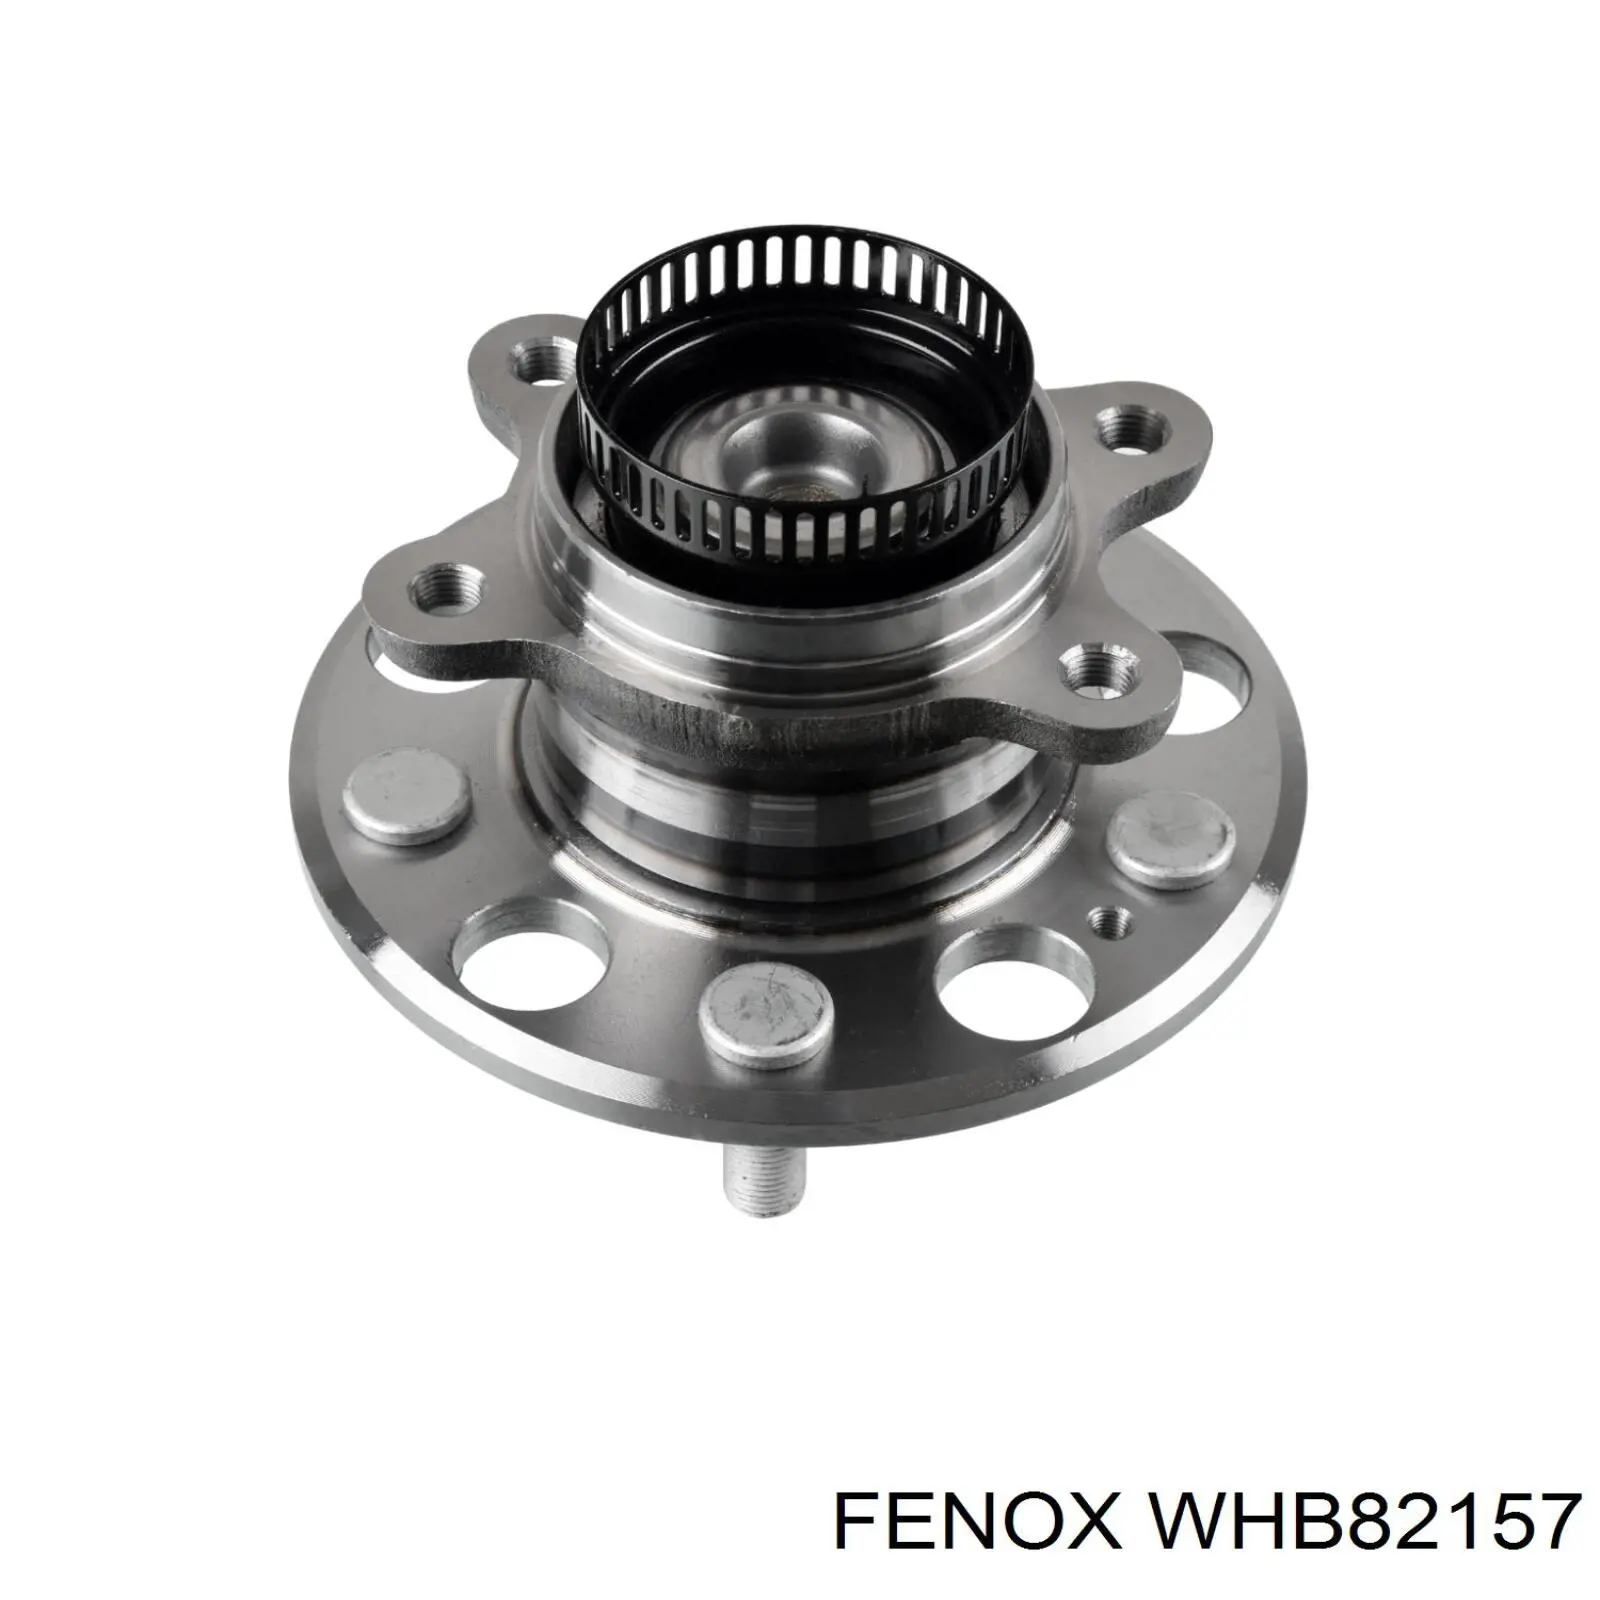 WHB82157 Fenox ступица задняя